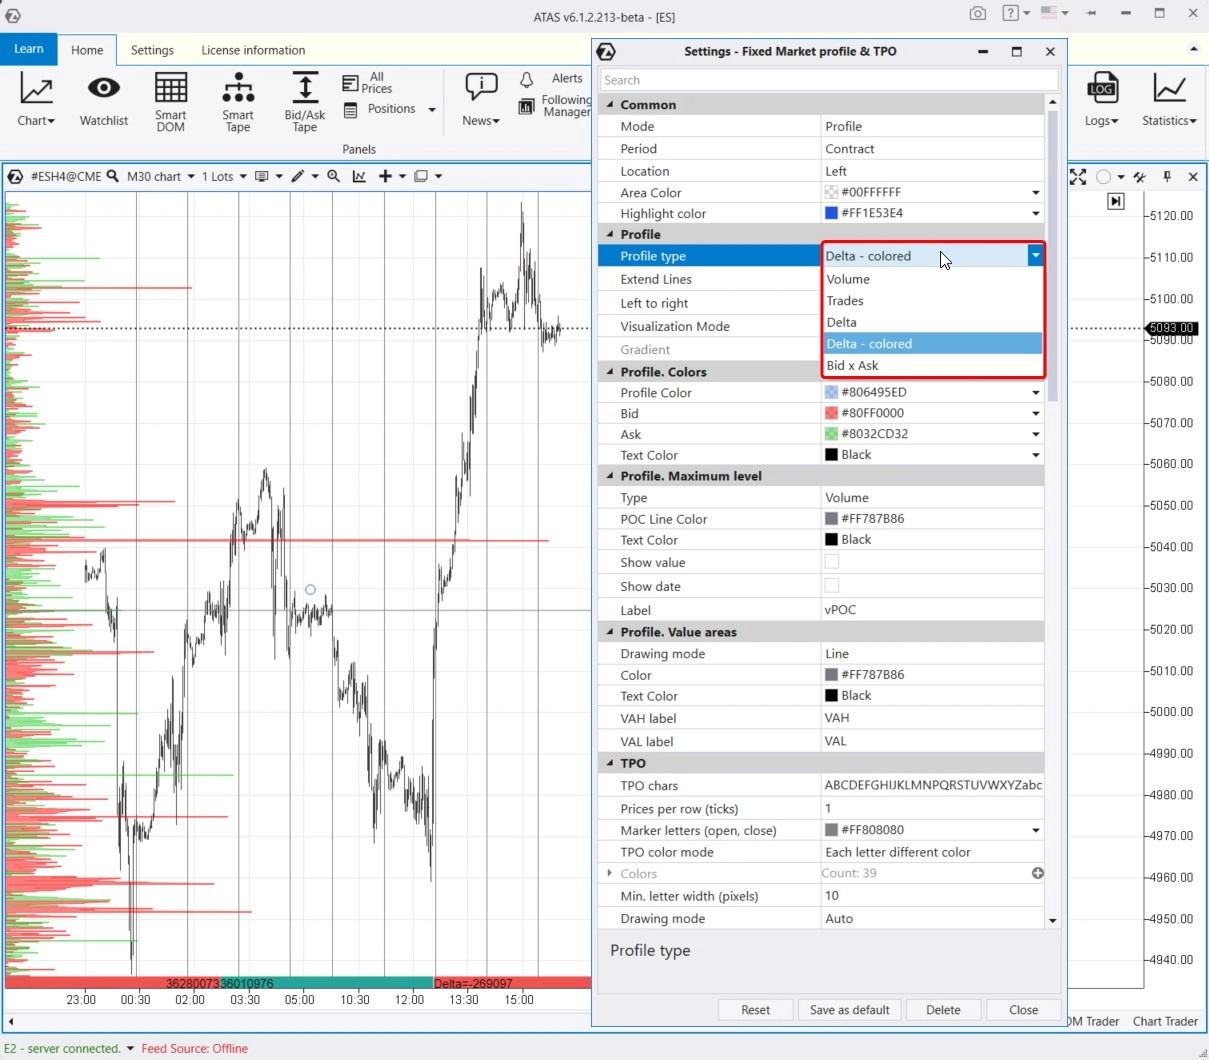 Fixed Market Profile & TPO Indicator, Type = Delta